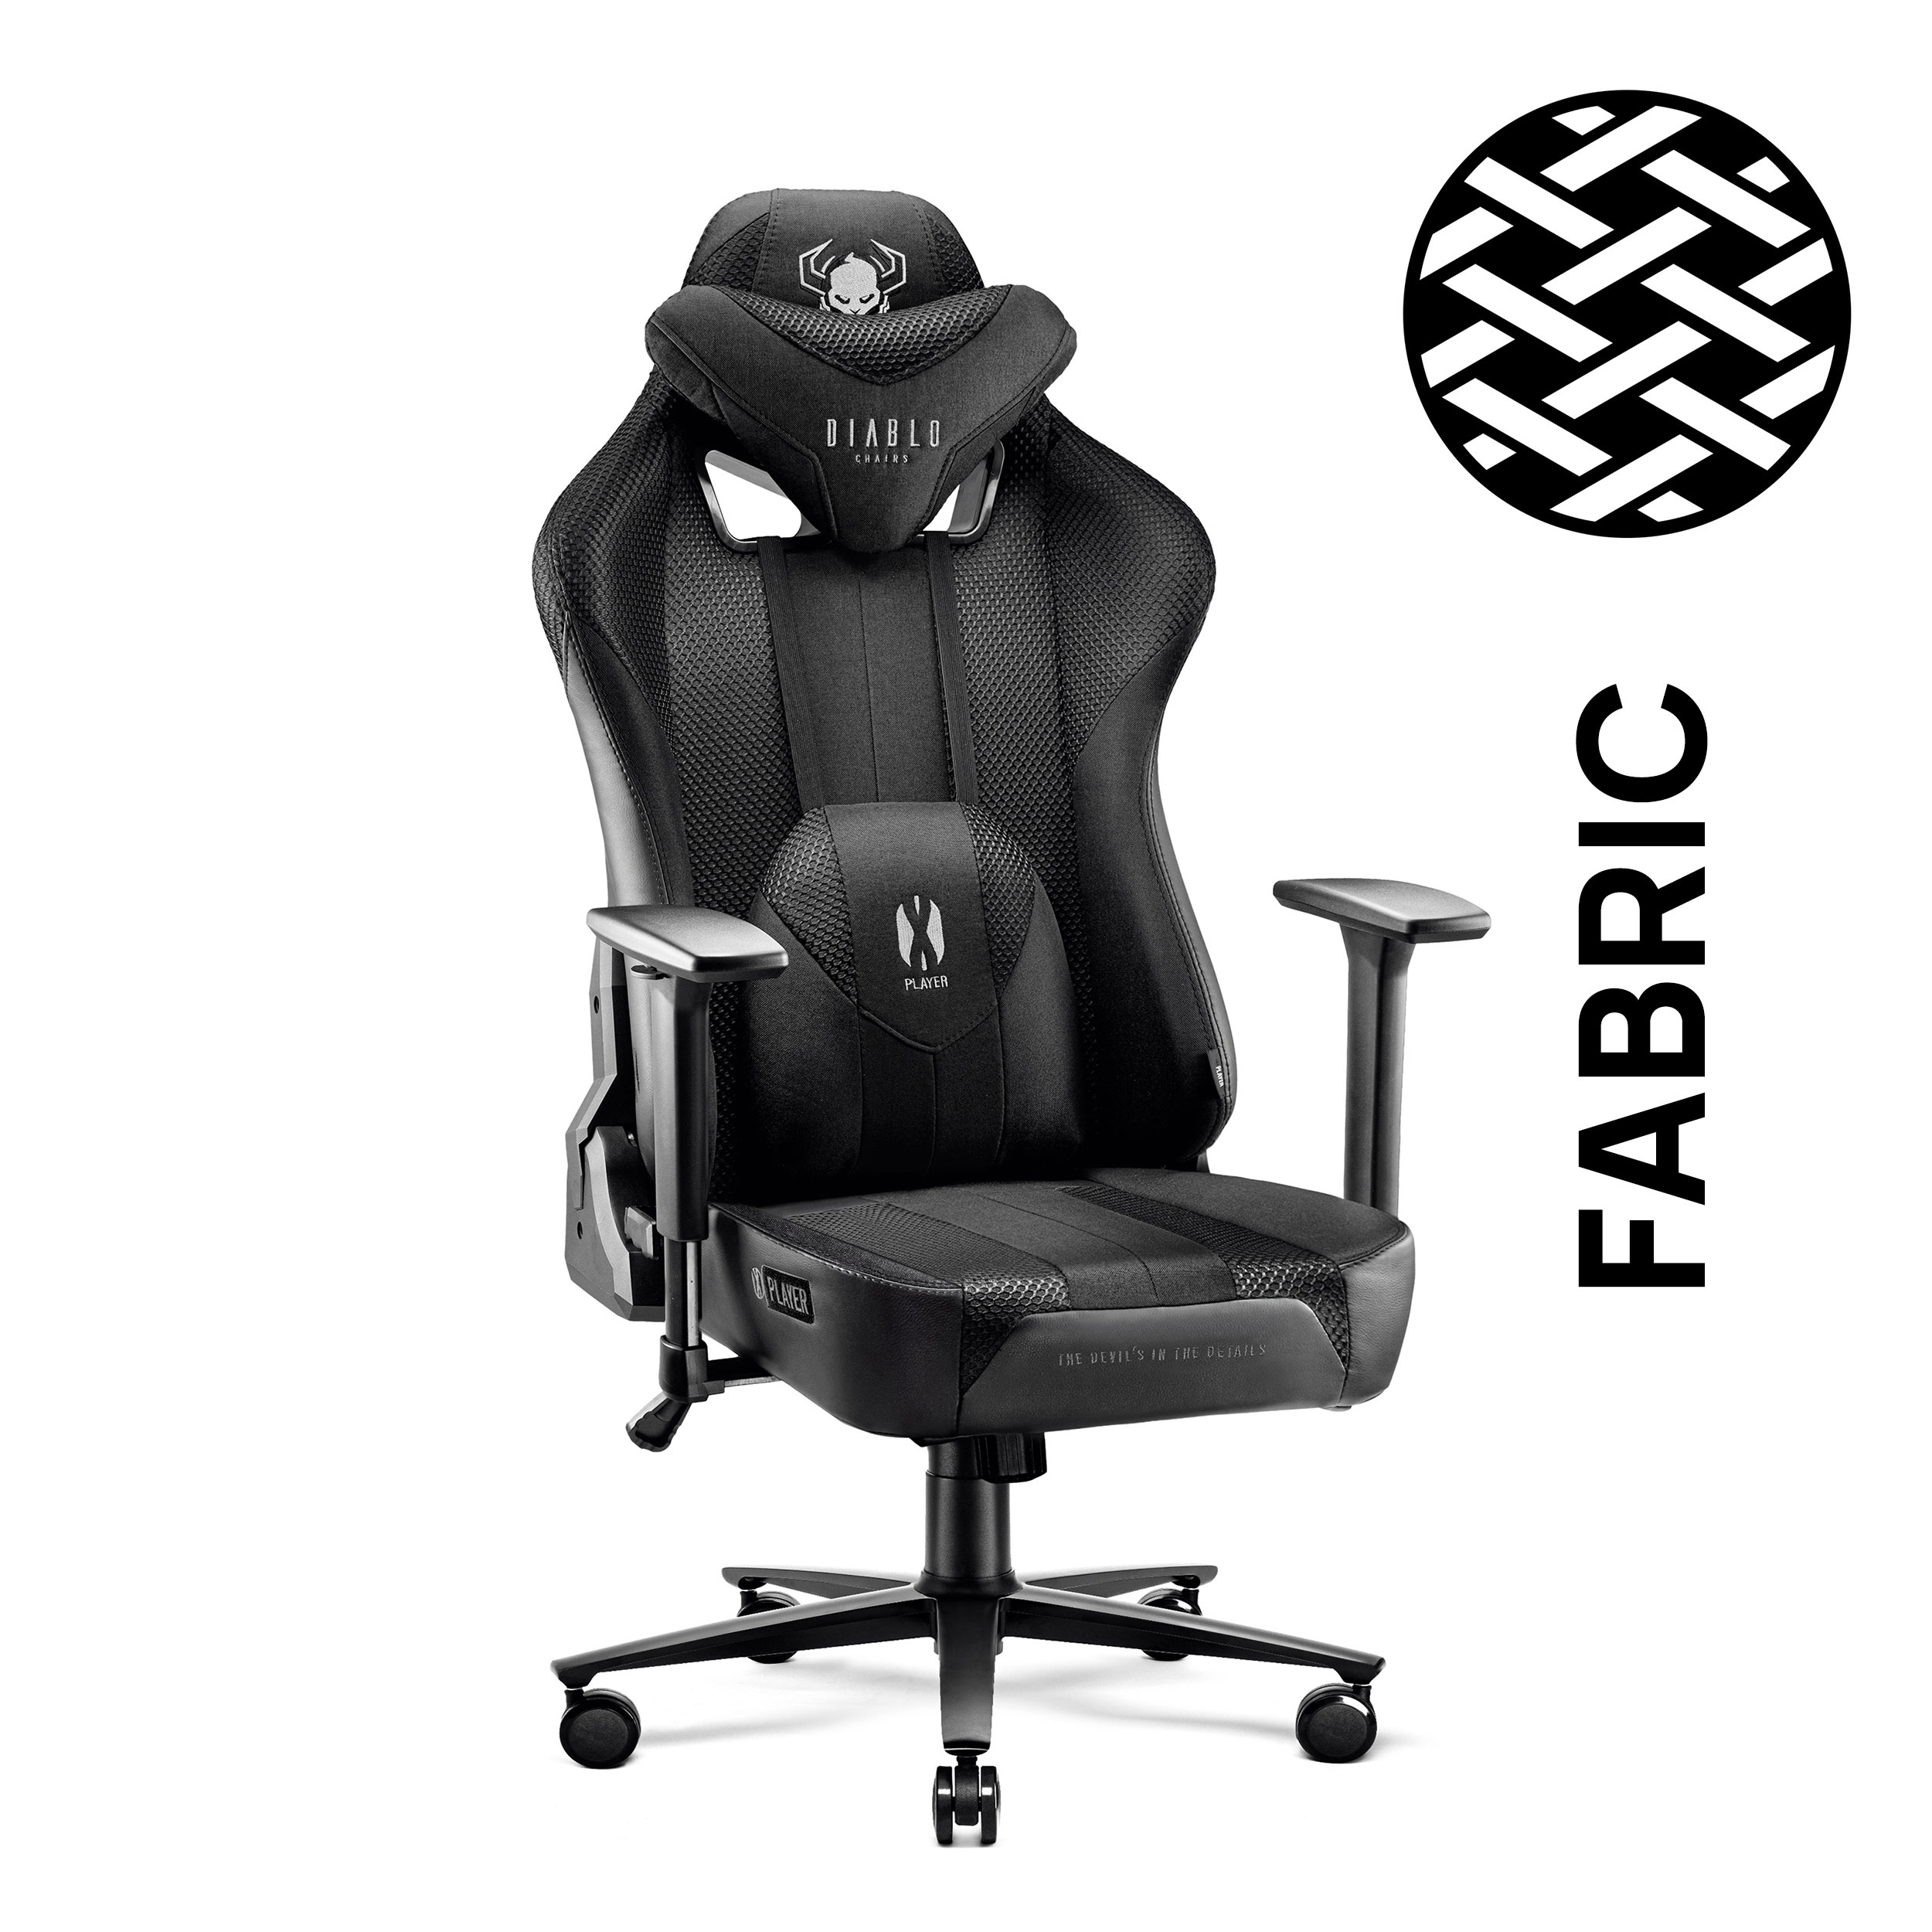 DIABLO CHAIRS GAMING STUHL Chair, NORMAL Gaming X-PLAYER black 2.0